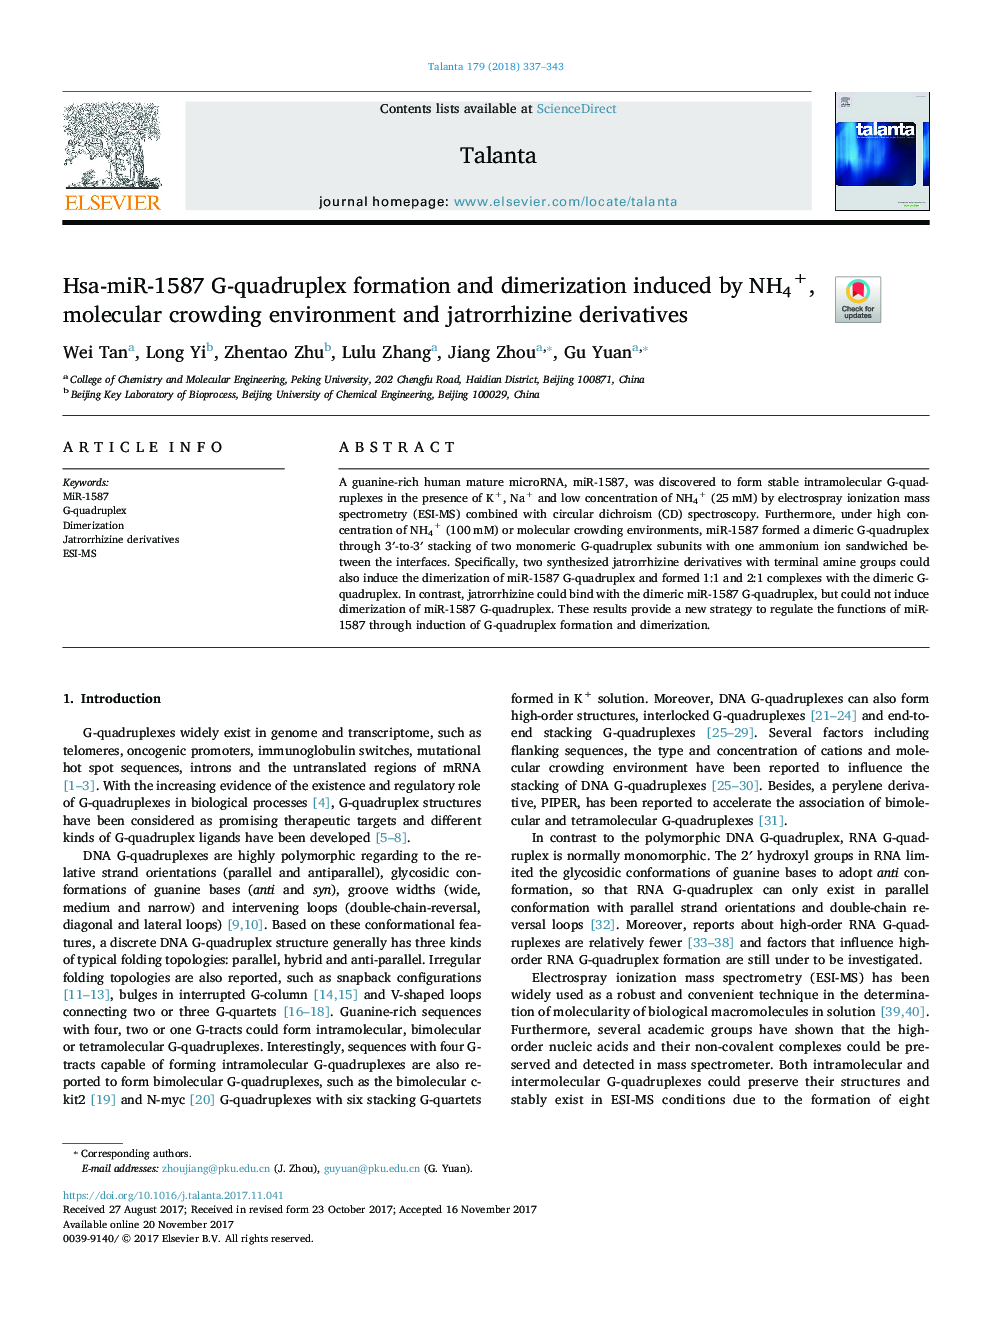 HsaâmiRâ1587 Gâquadruplex formation and dimerization induced by NH4+, molecular crowding environment and jatrorrhizine derivatives